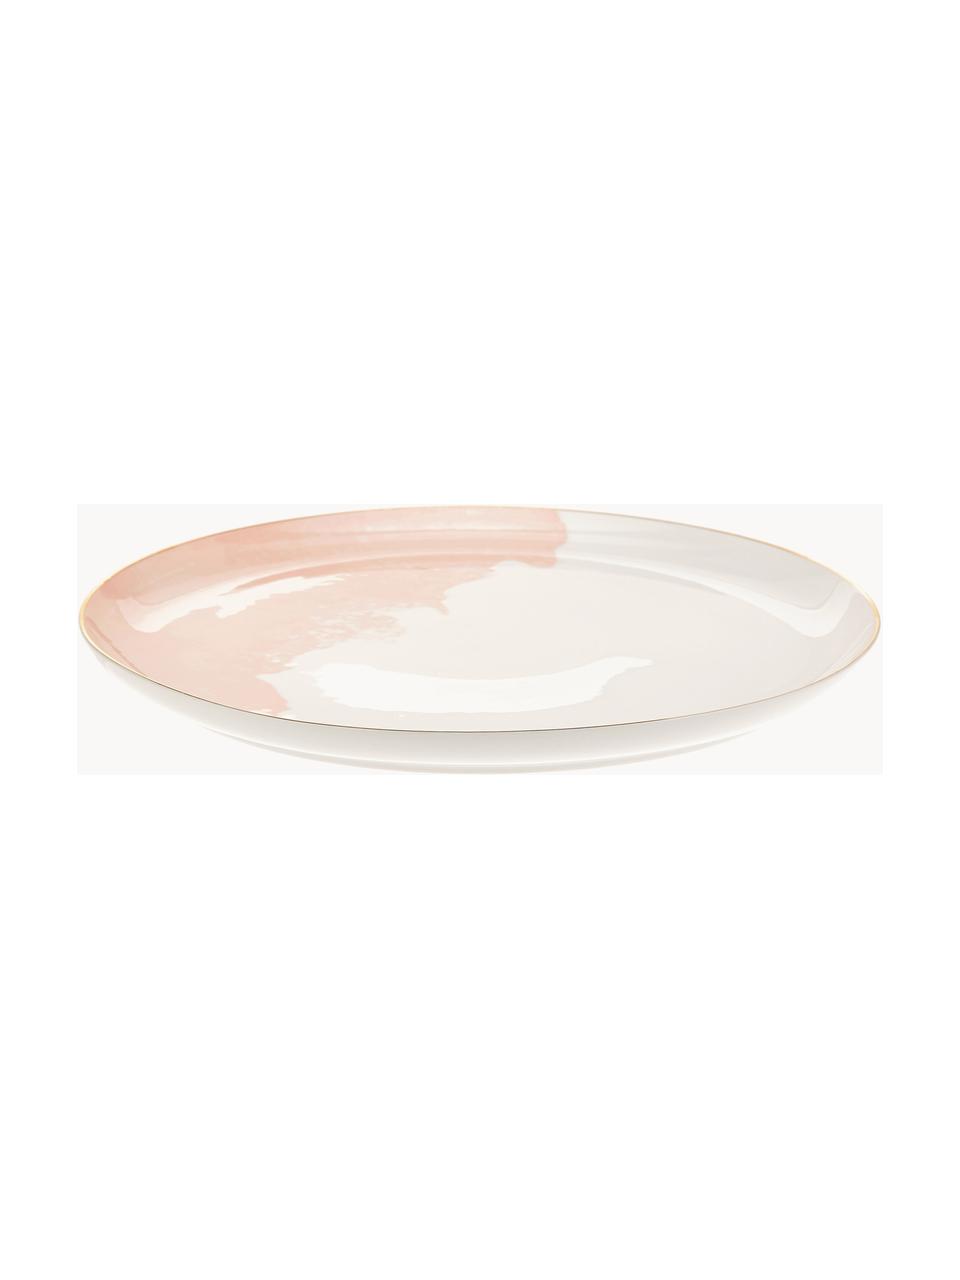 Rosie - Assiette Plate en Porcelaine - 28 cm - Rose - Habitat